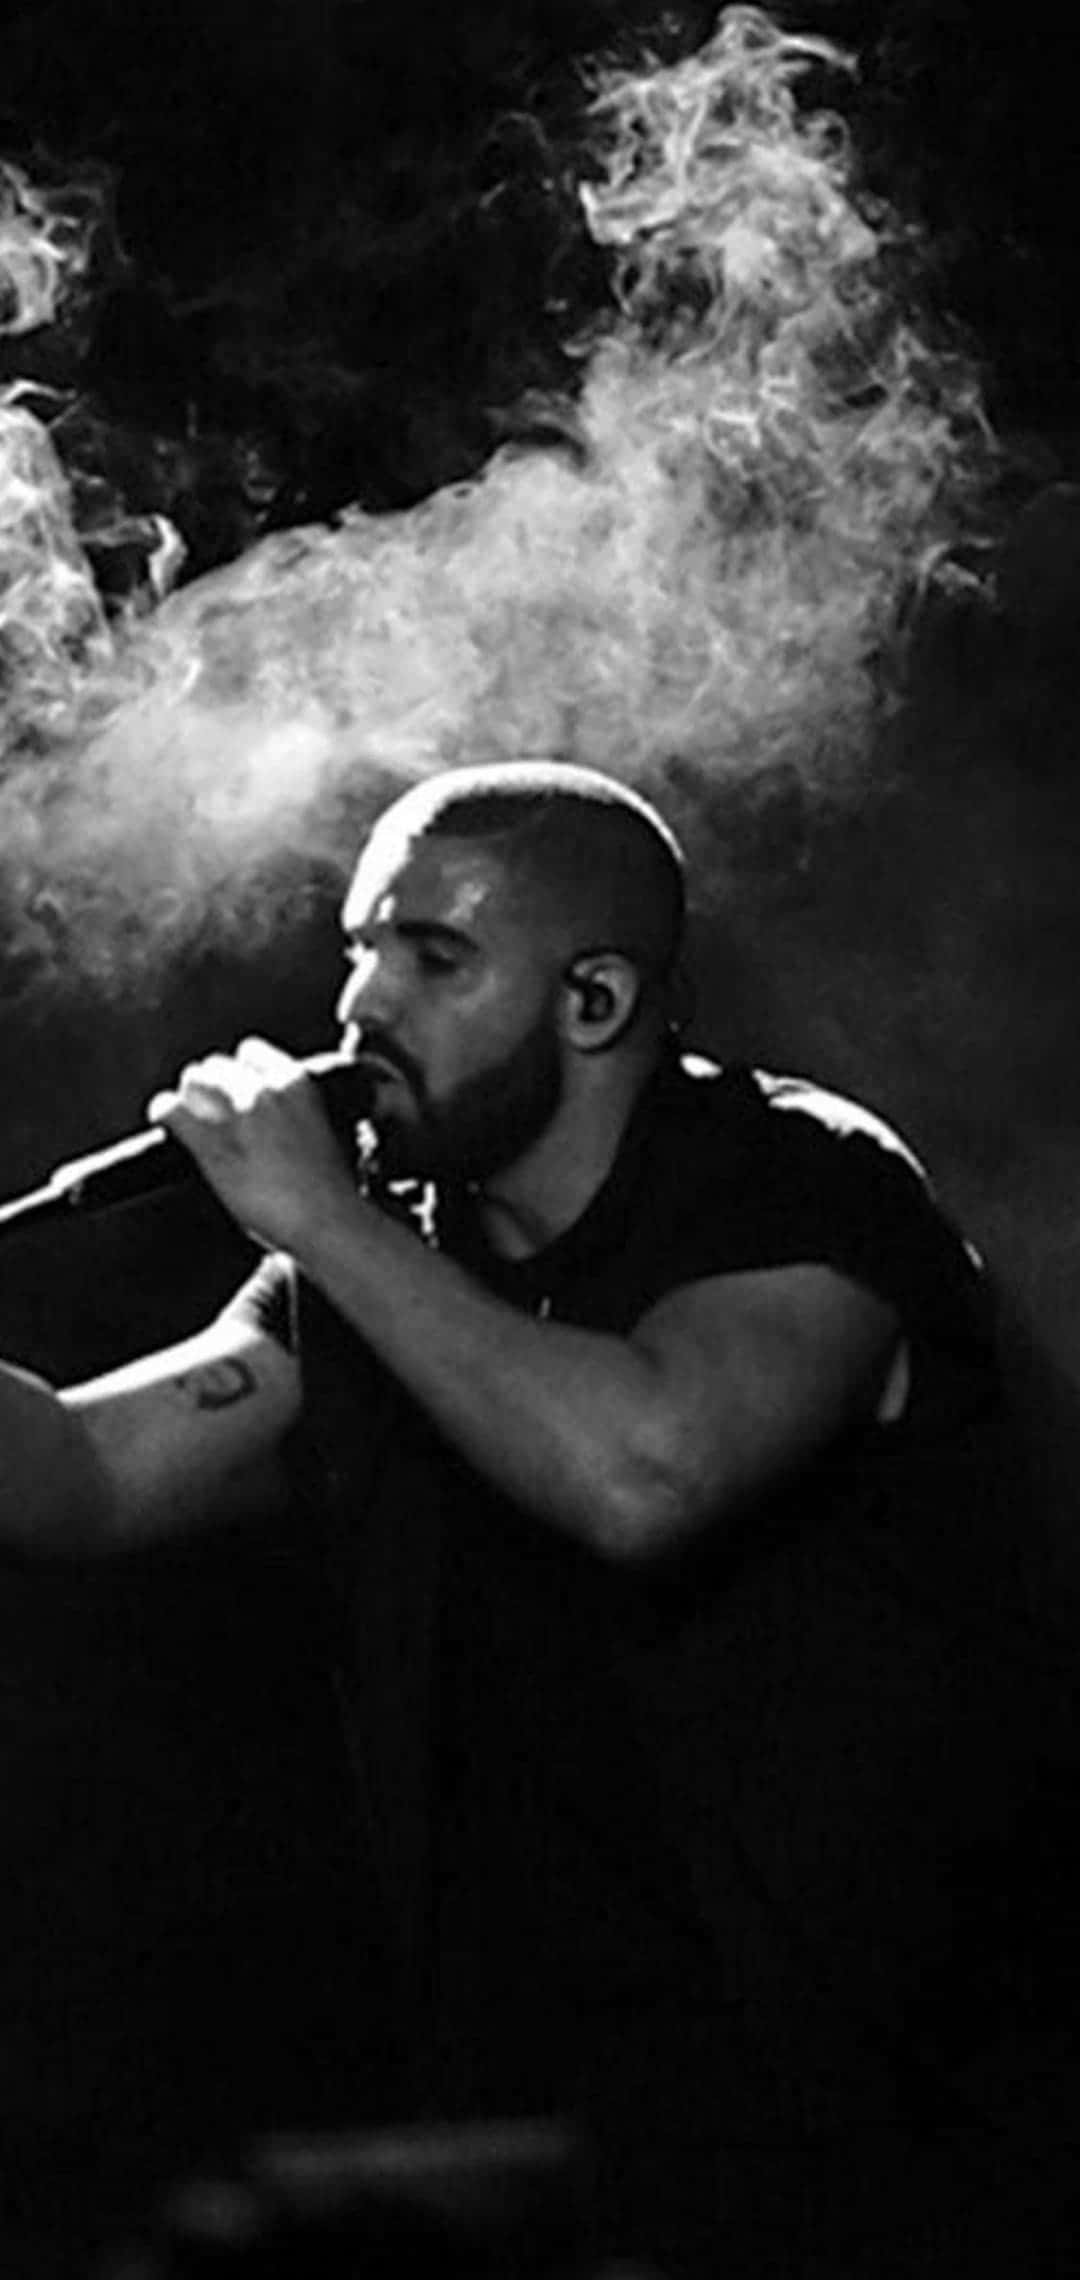 Aesthetic Drake - Inspiring Music and Style Wallpaper